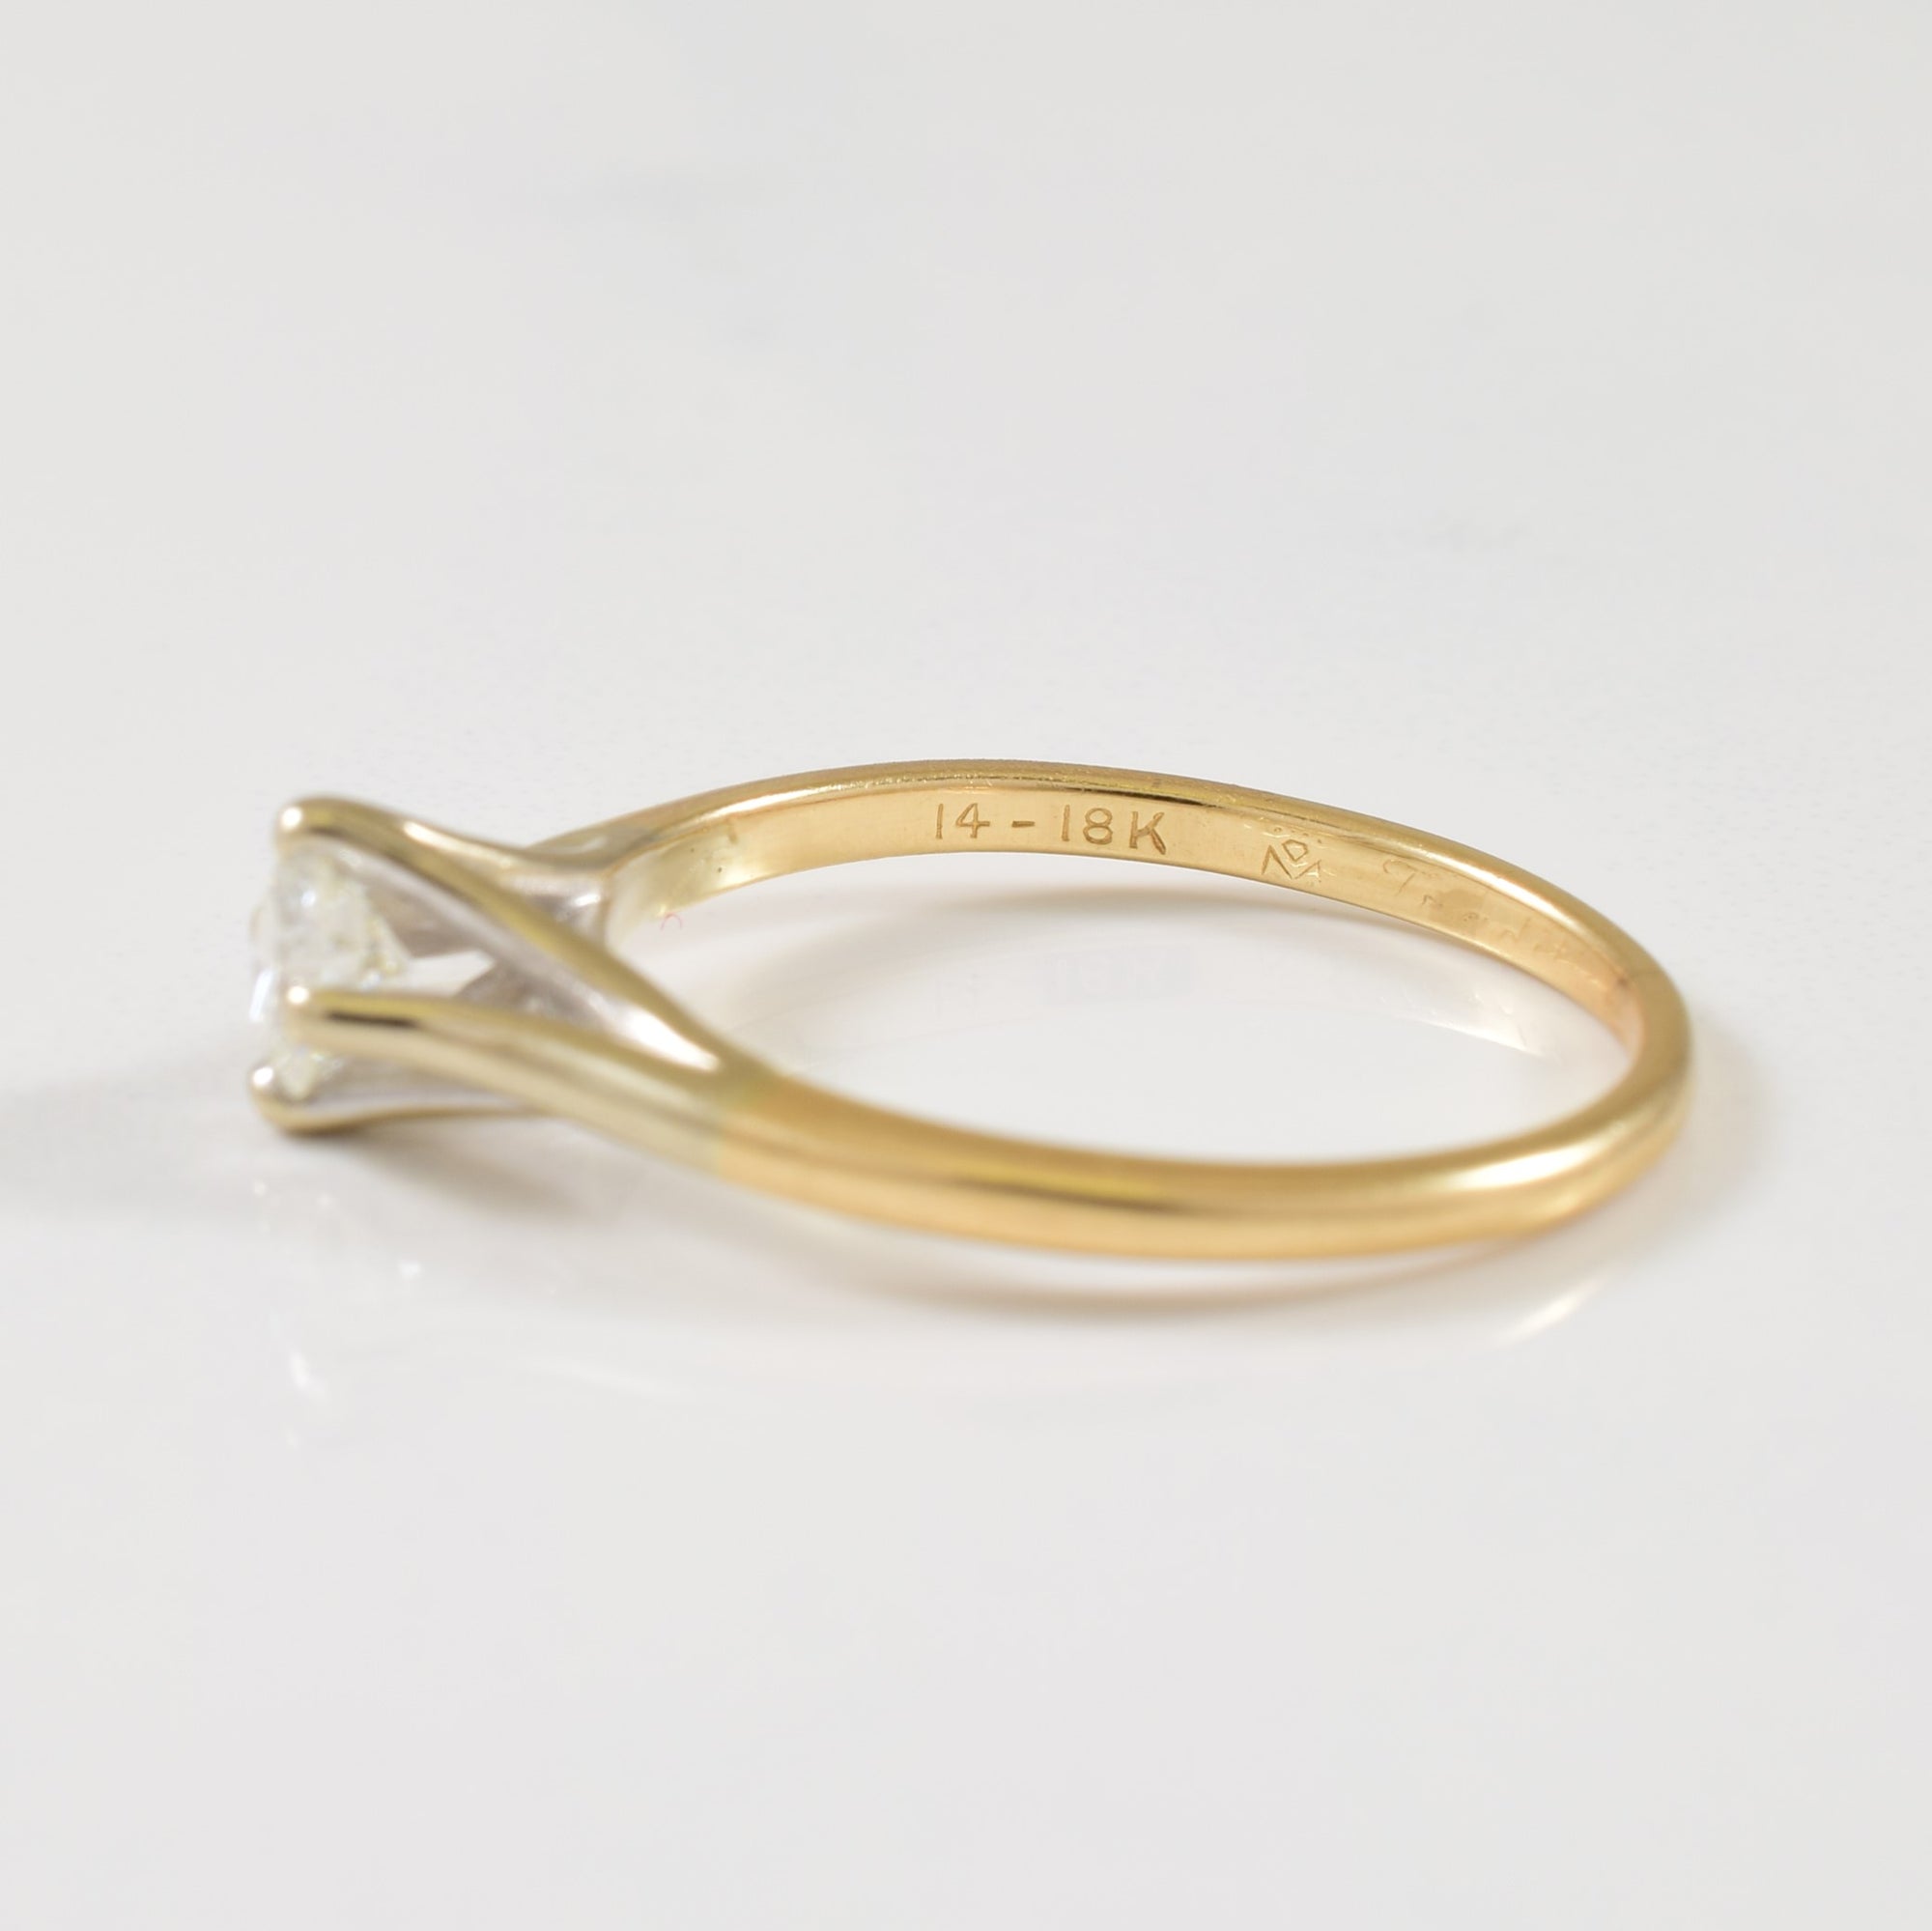 Solitaire Diamond Ring | 0.28ct | SZ 6.5 |